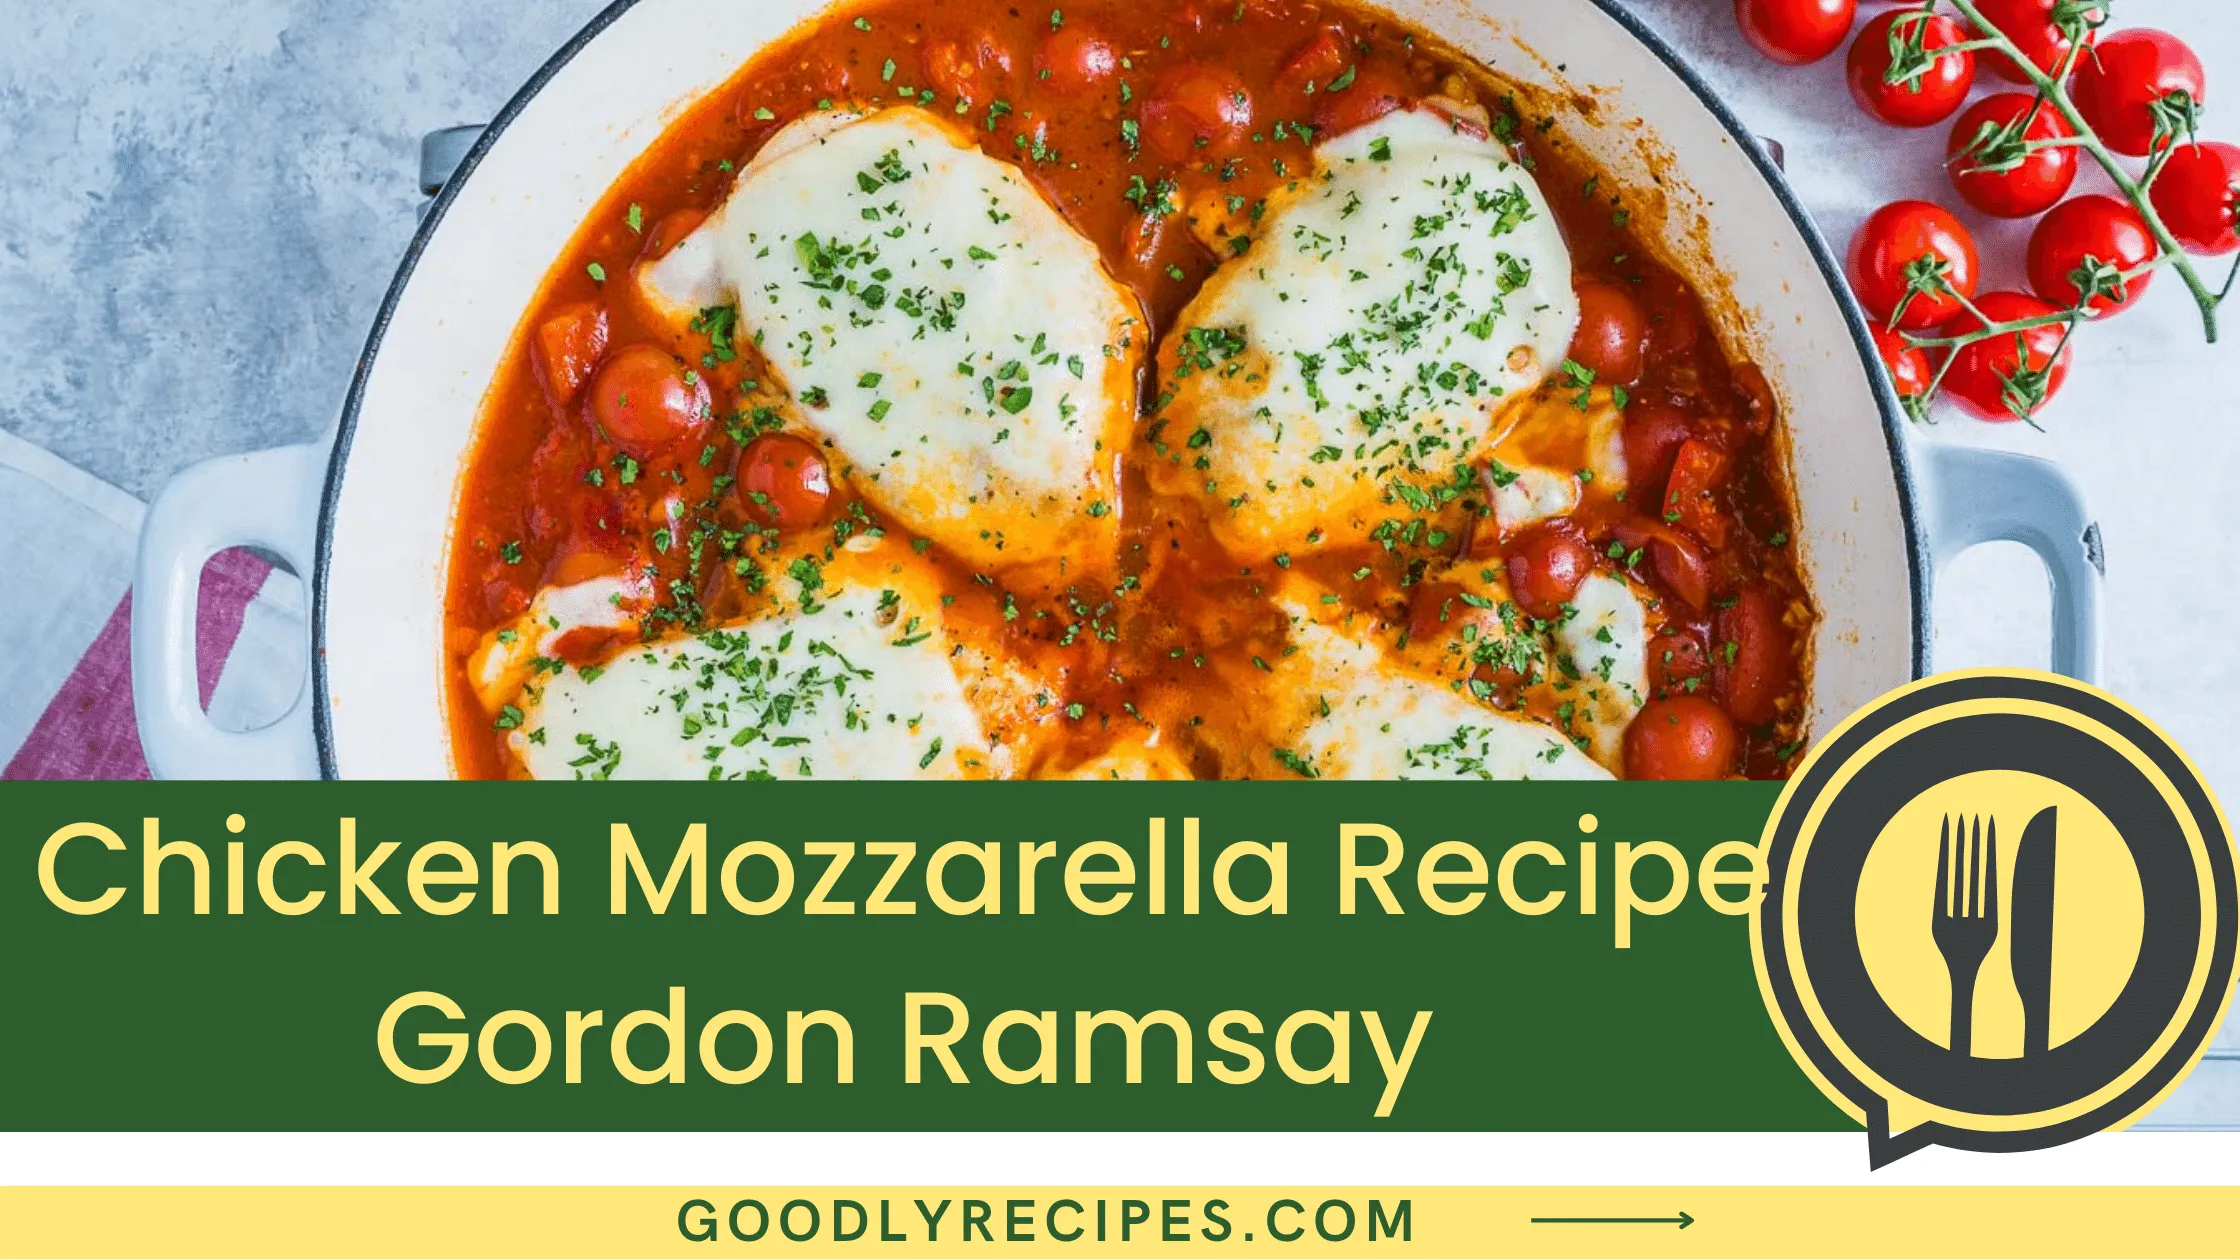 What Is Chicken Mozzarella Gordon Ramsay?